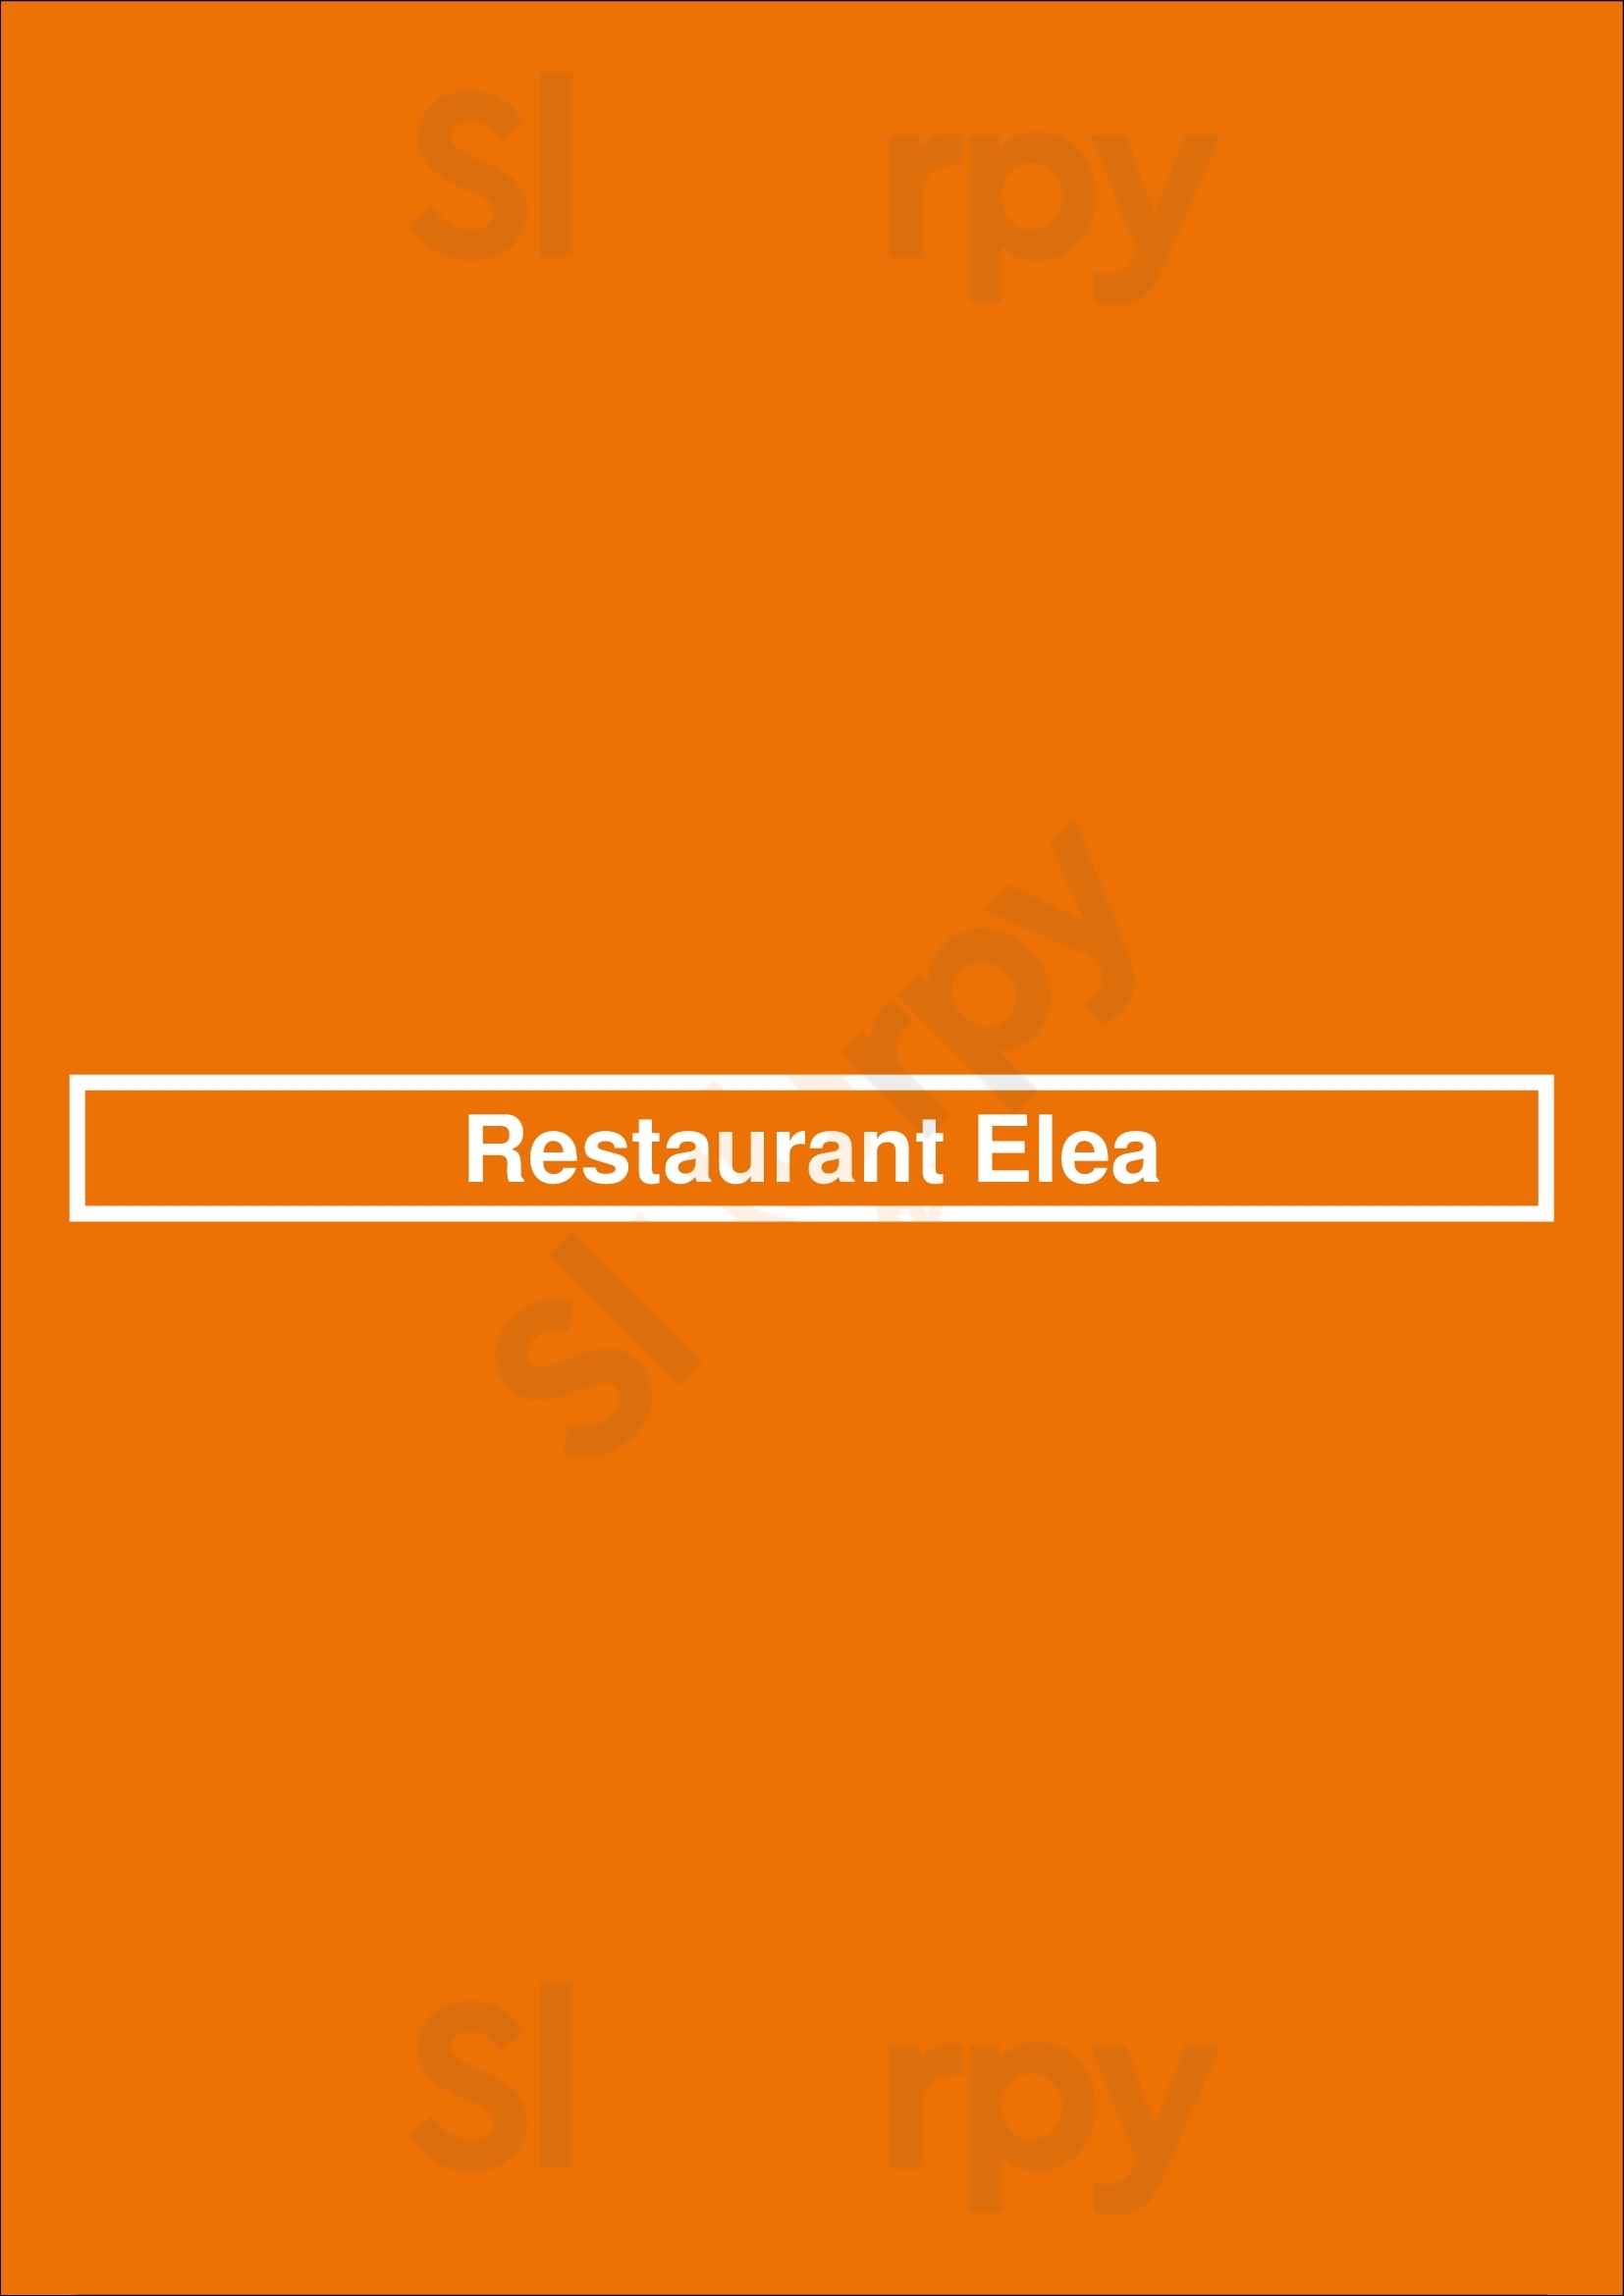 Restaurant Elea Rijswijk Menu - 1